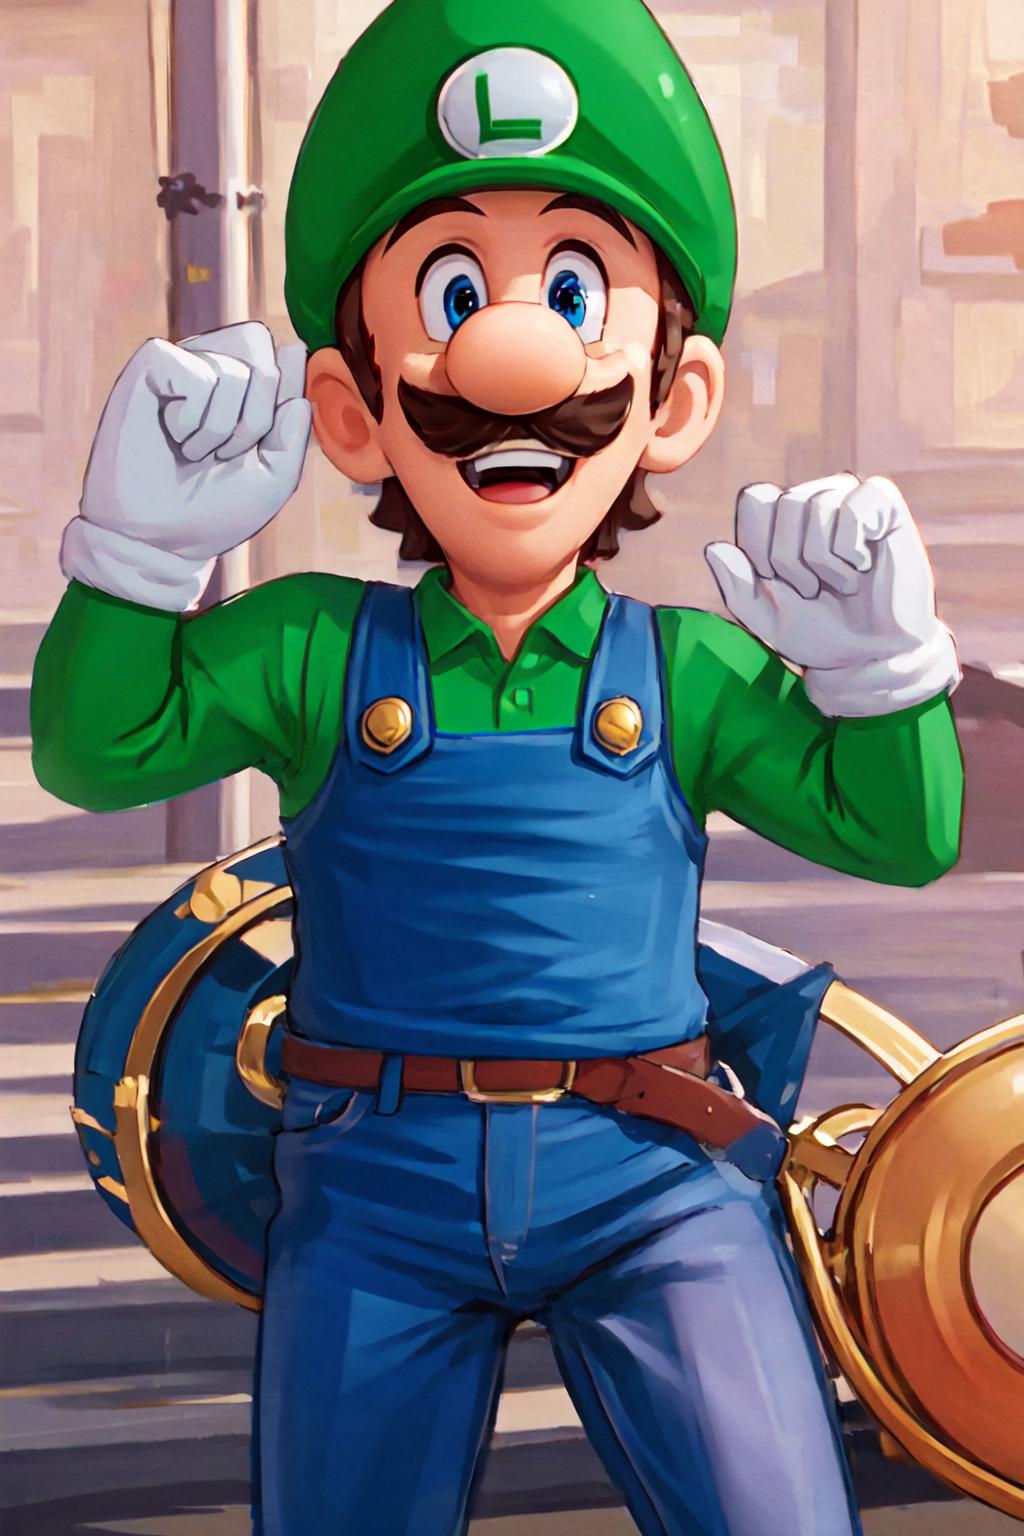 Luigi | Mario Series image by FallenIncursio